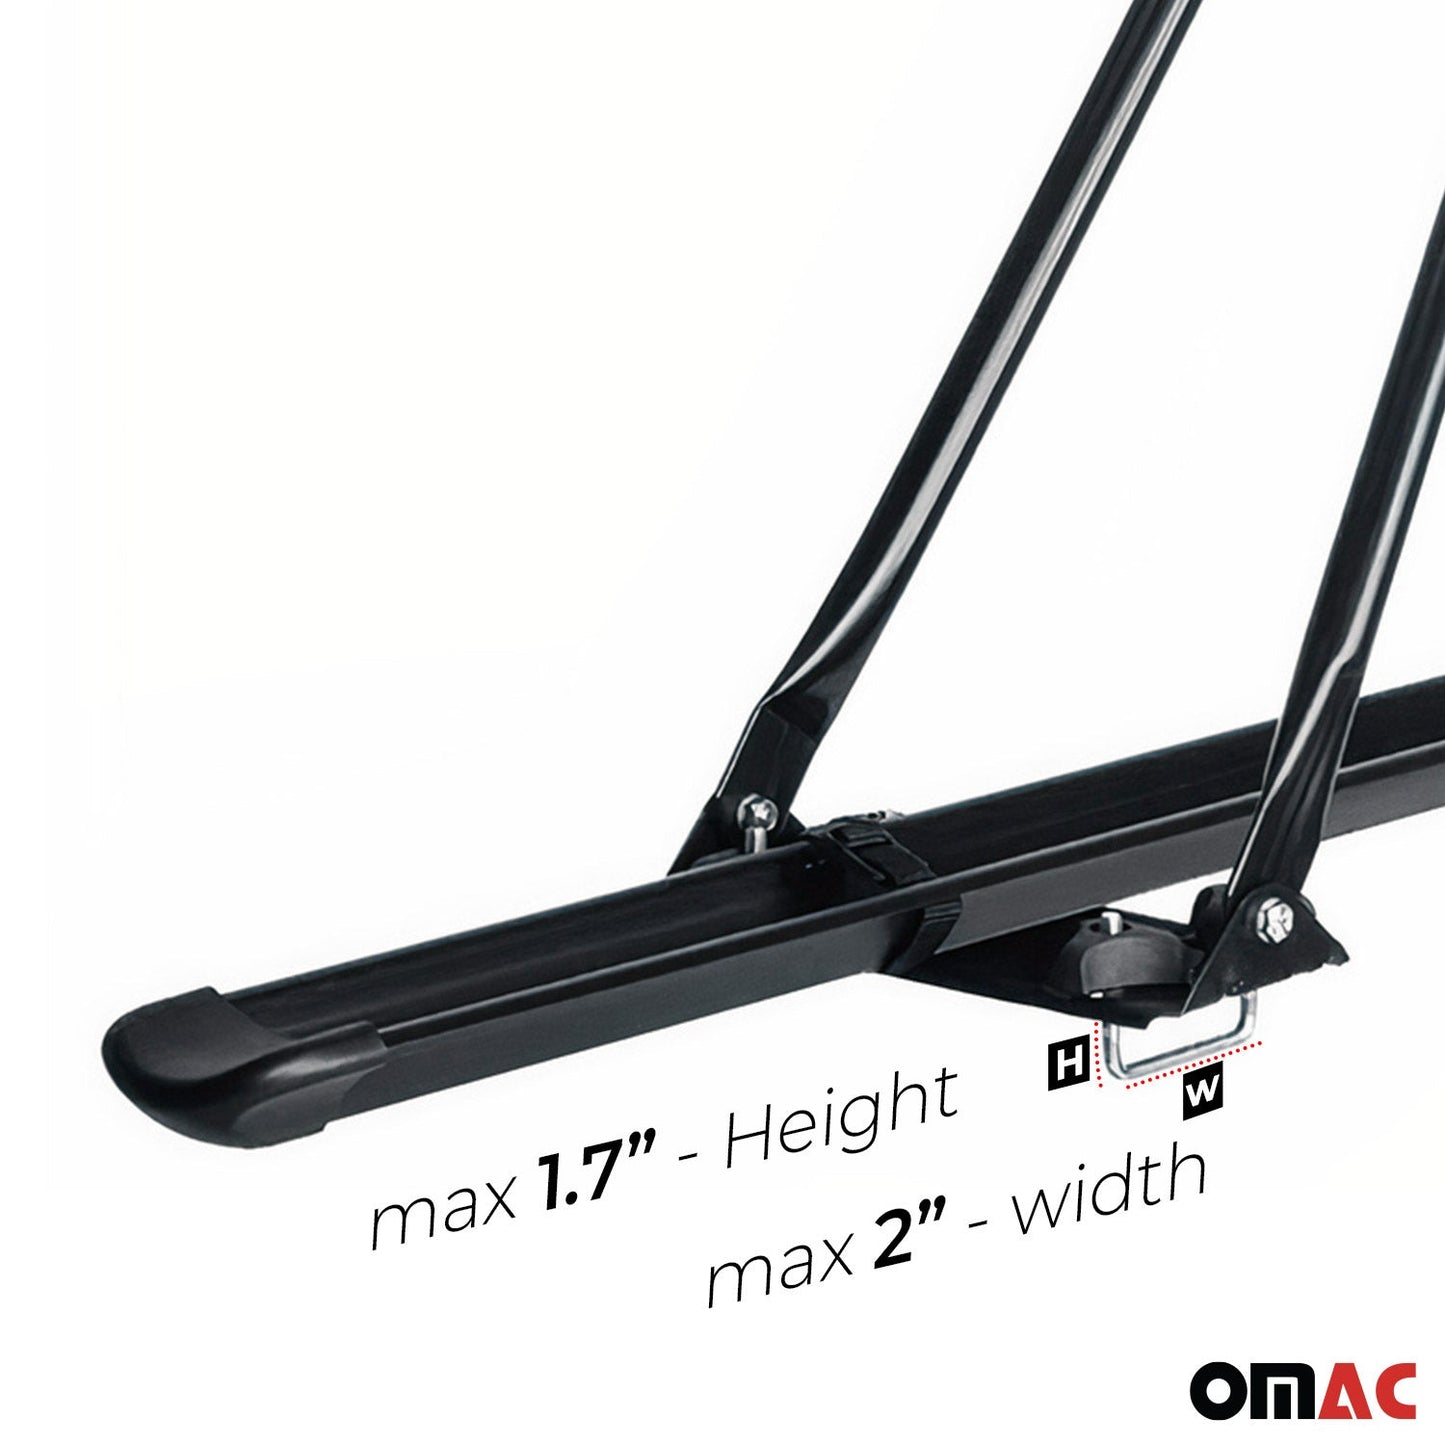 OMAC Bike Rack Carrier Roof Racks Set fits Toyota RAV4 2006-2012 Black 3x U020738